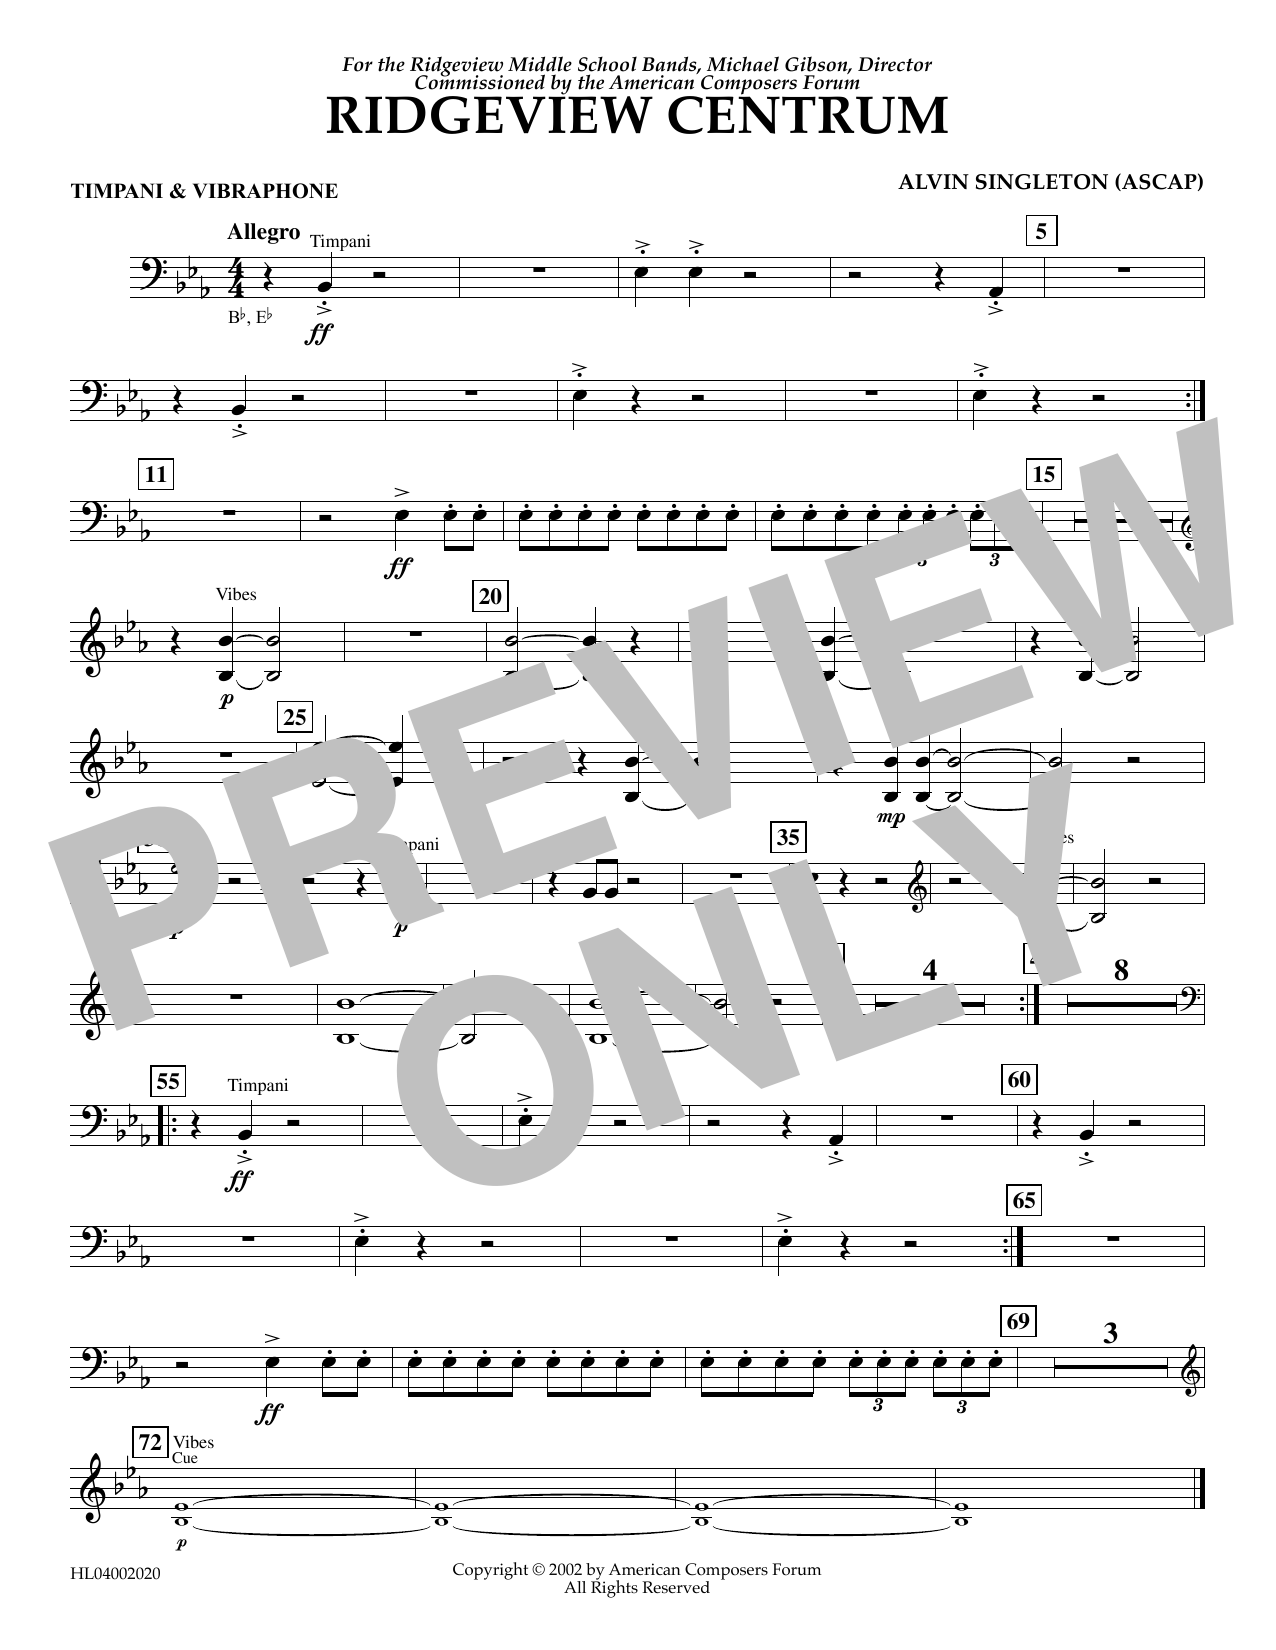 Alvin Singleton Ridgeview Centrum - Timpani, Vibraphone Sheet Music Notes & Chords for Concert Band - Download or Print PDF